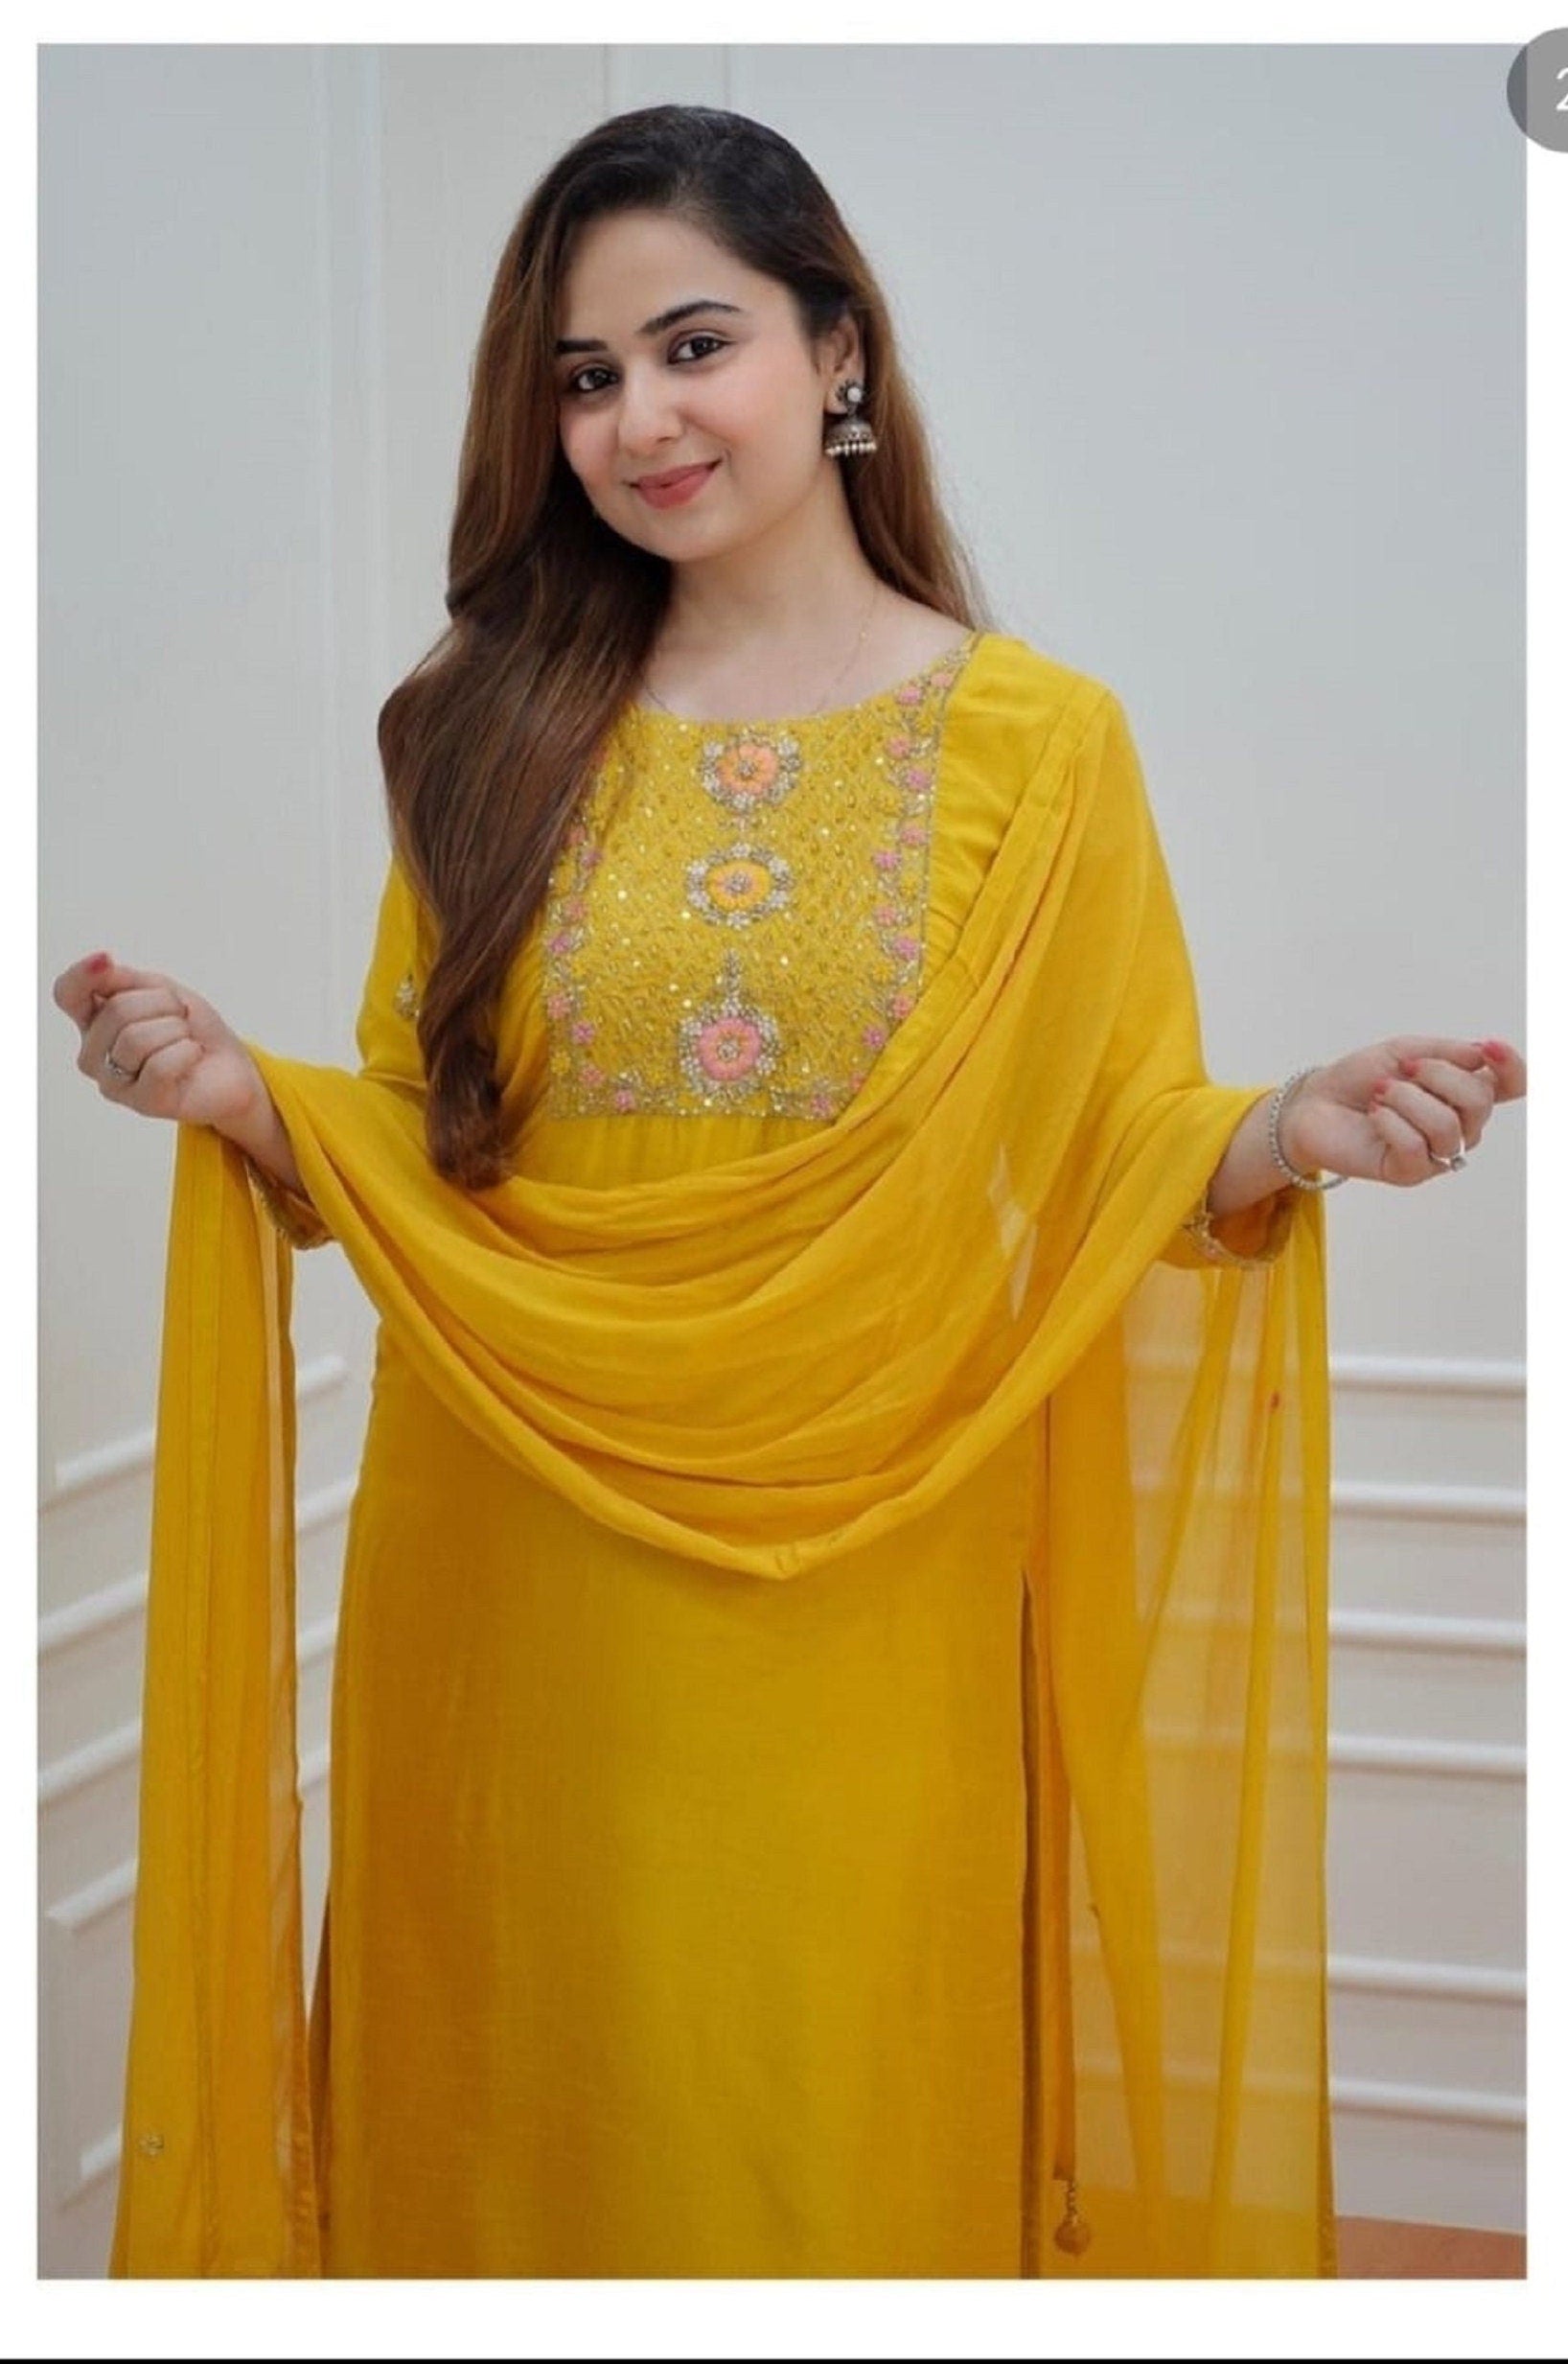 Ladies Designer Yellow Kitty Party Wear Kurti at Rs 849 / Piece in Surat |  New Shriji Fashion